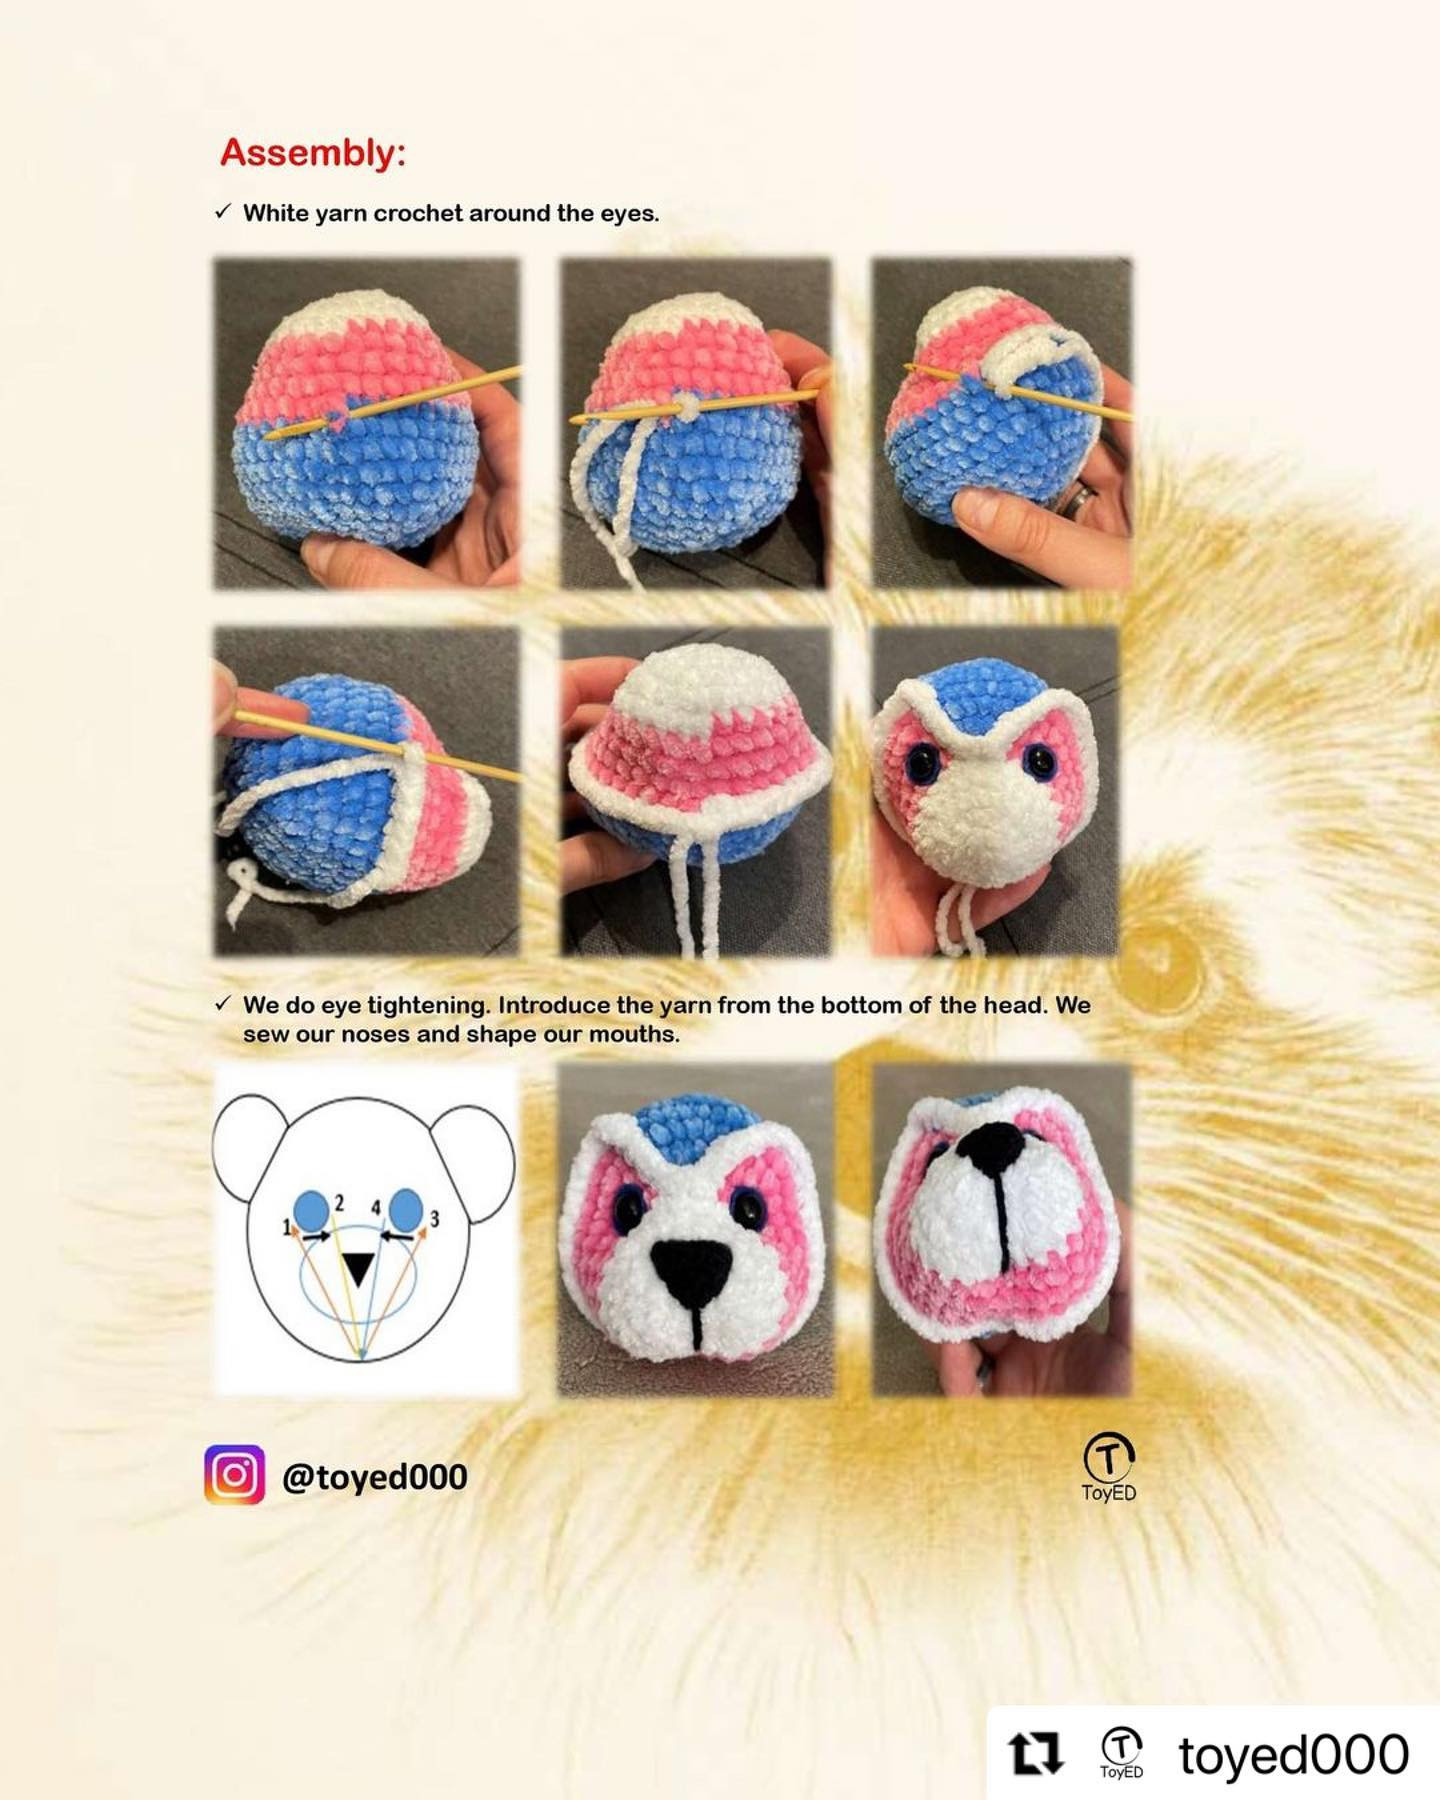 🦝 Free Raccoon crochet patterns 🦝